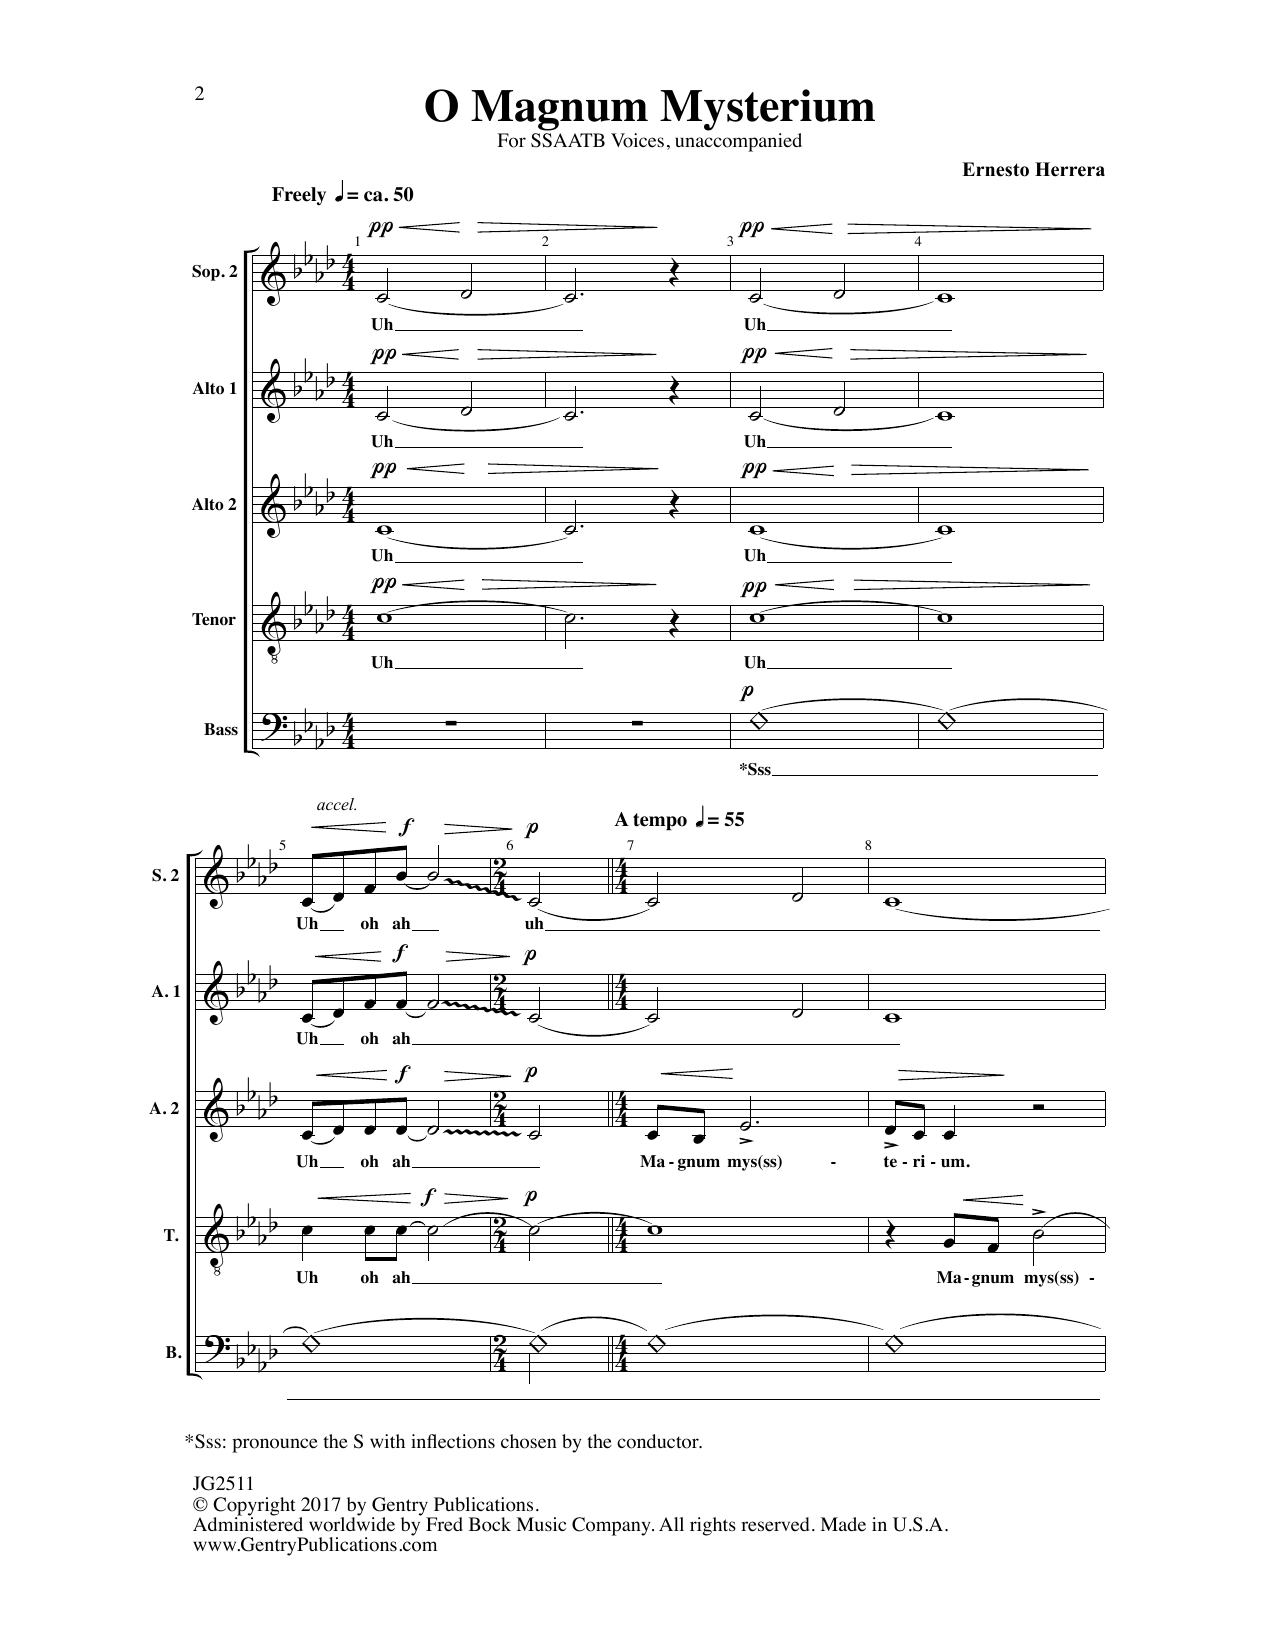 Ernesto Herrera O Magnum Mysterium Sheet Music Notes & Chords for Choral - Download or Print PDF